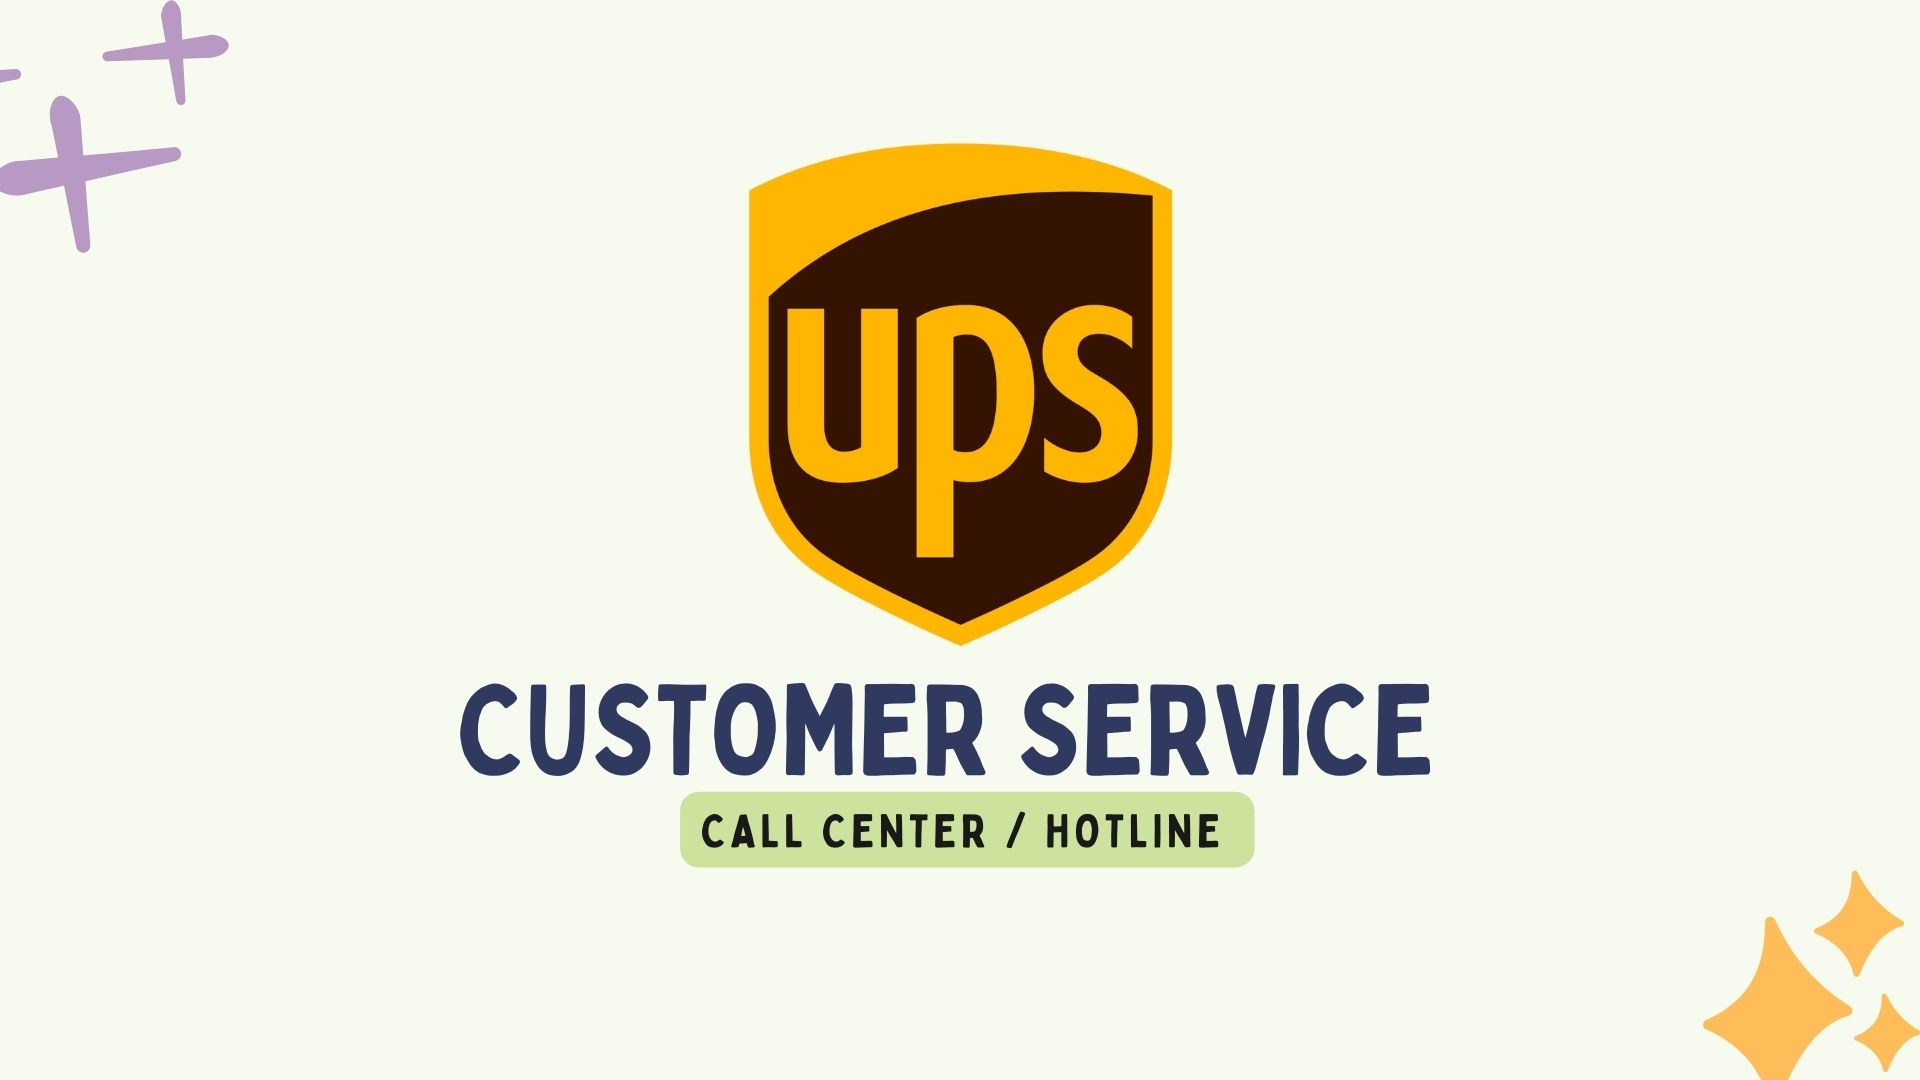 United Parcel Service Customer Service